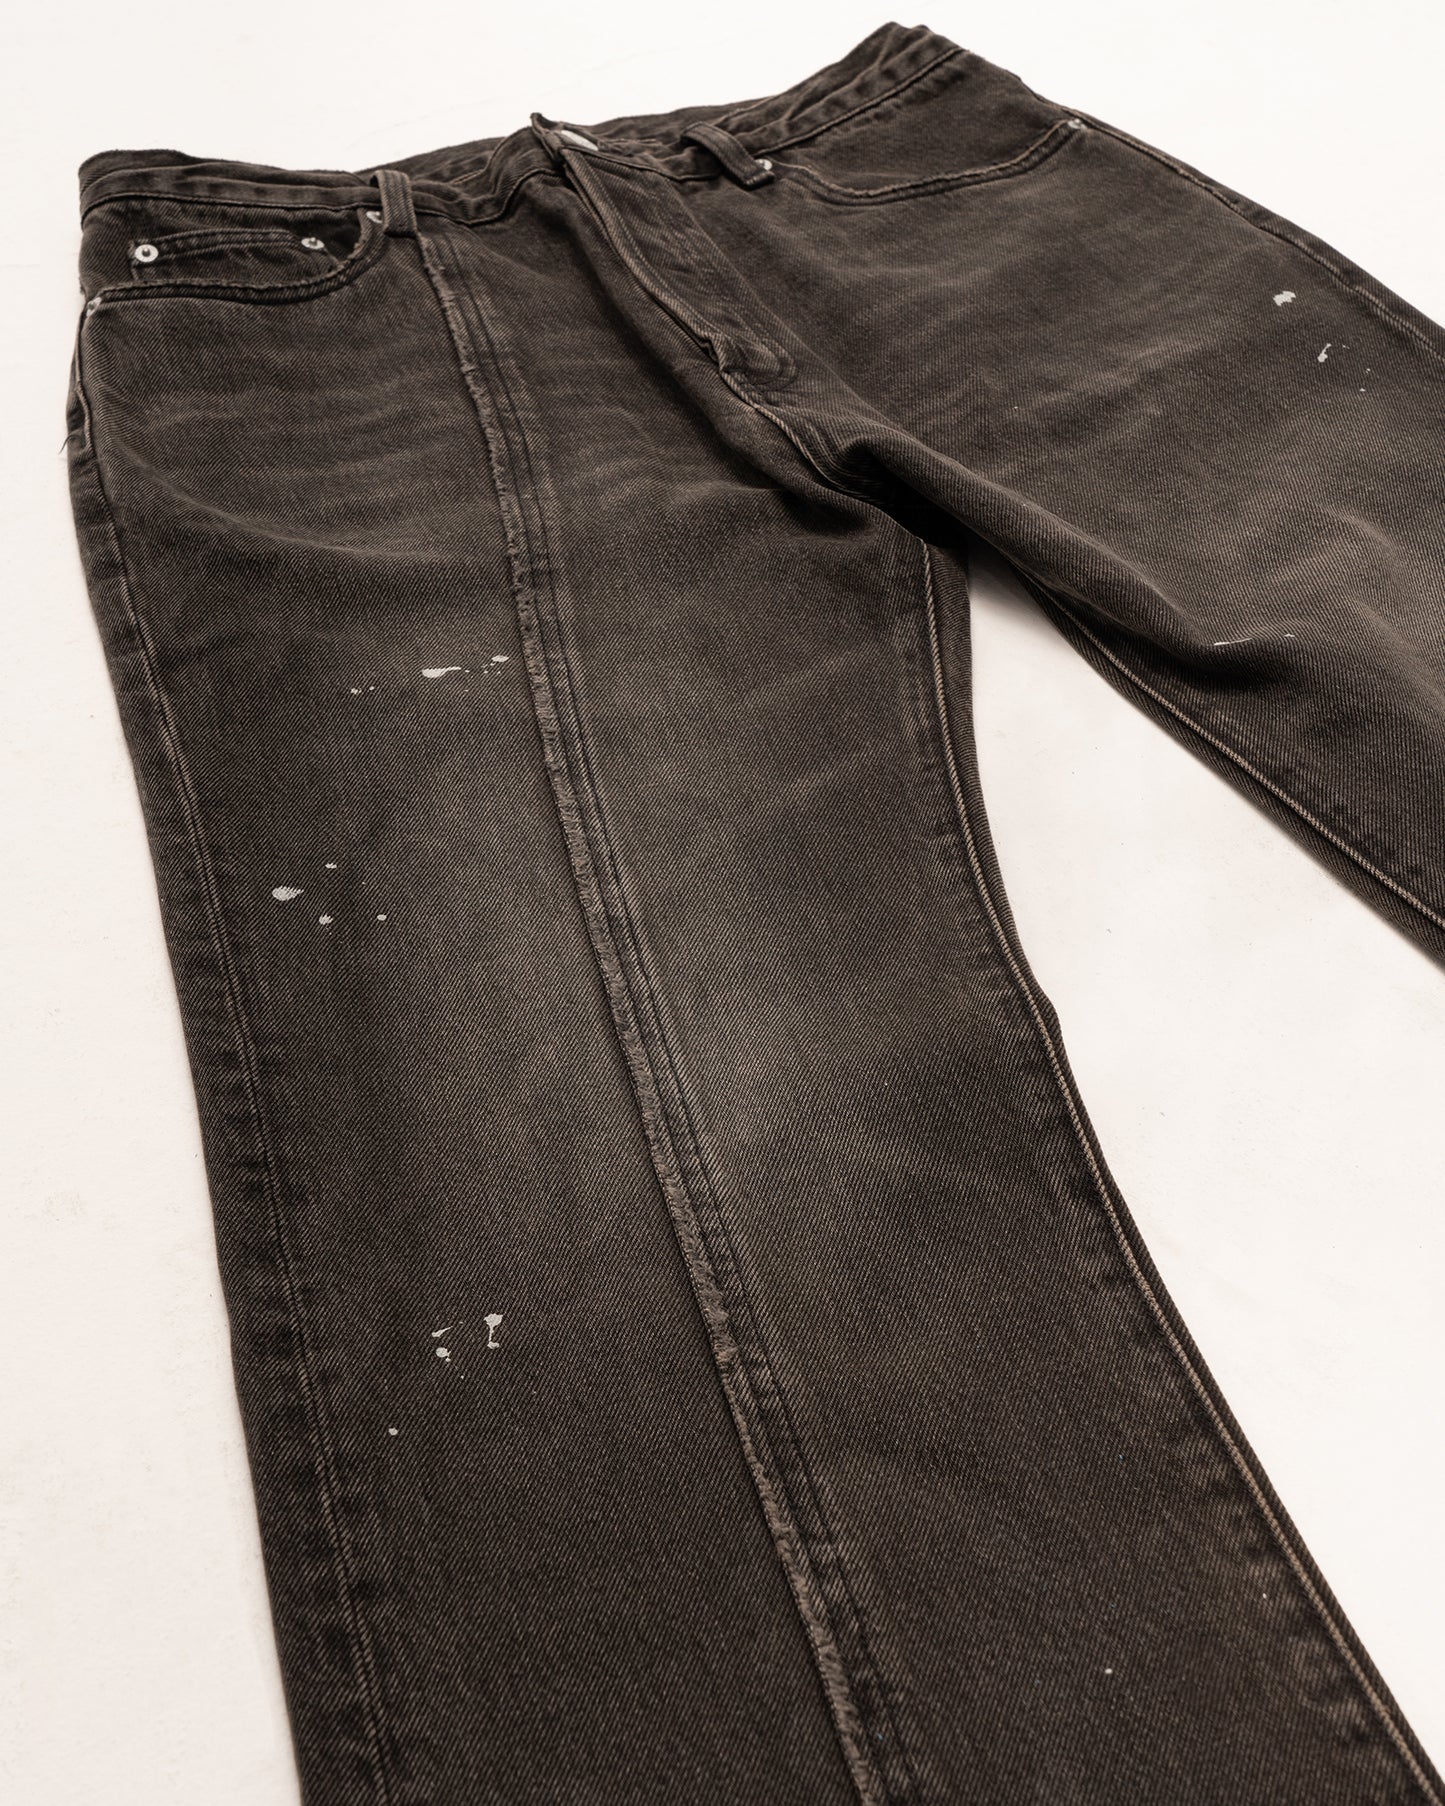 Print Seam Mud Black Jeans